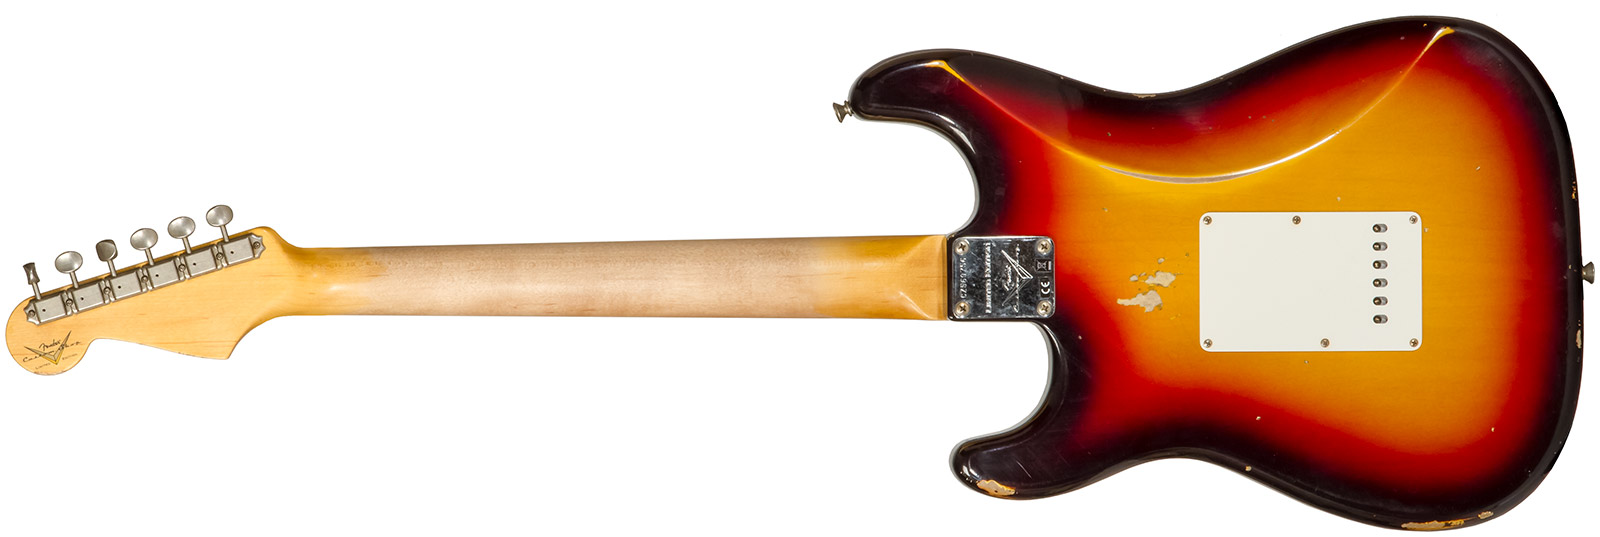 Fender Custom Shop Strat Late 1964 3s Trem Rw #cz569756 - Relic Target 3-color Sunburst - Guitare Électrique Forme Str - Variation 1